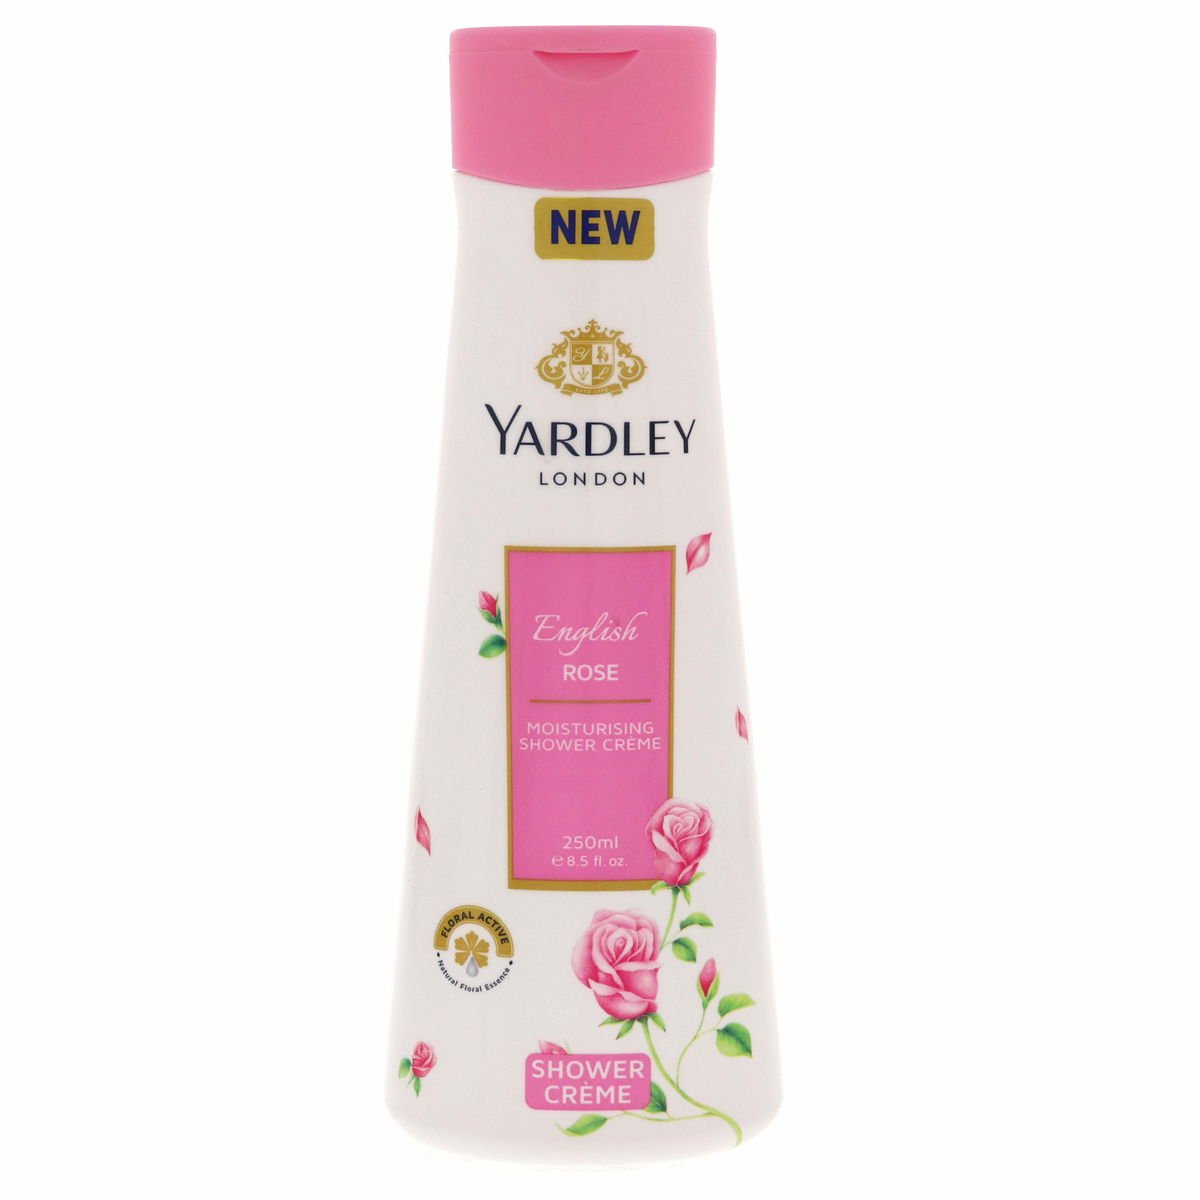 Yardley London English Rose Moisturising Shower Creme 250 ml